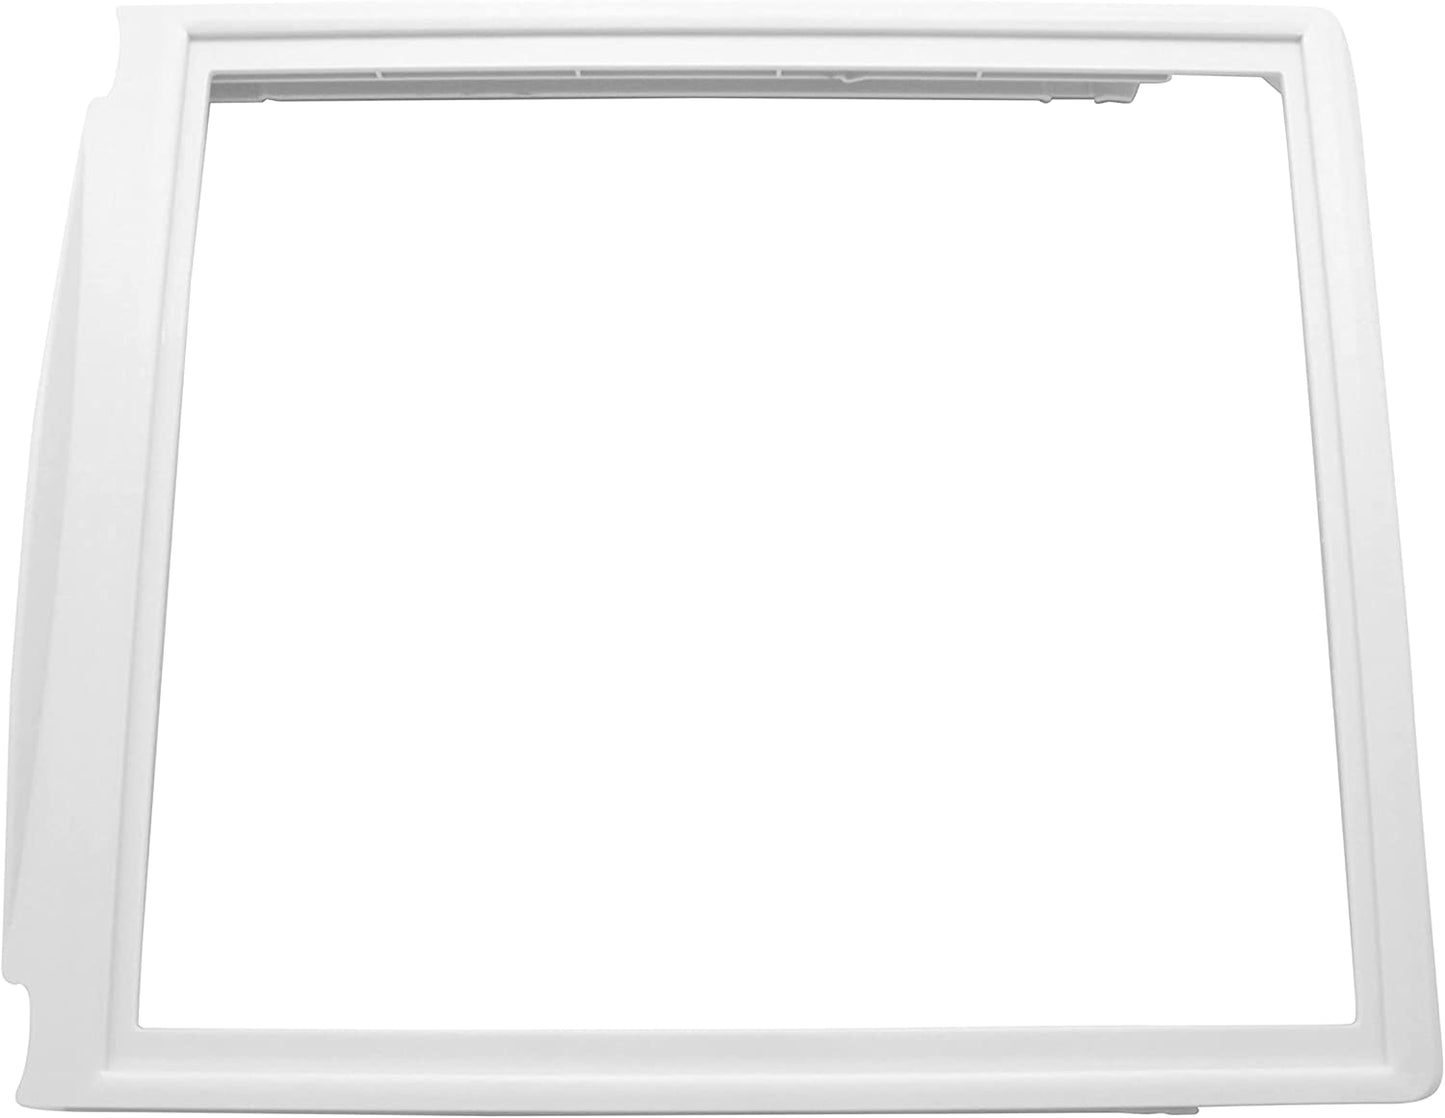 240599803 Crisper Pan Cover Compatible with Frigidaire Refrigerator